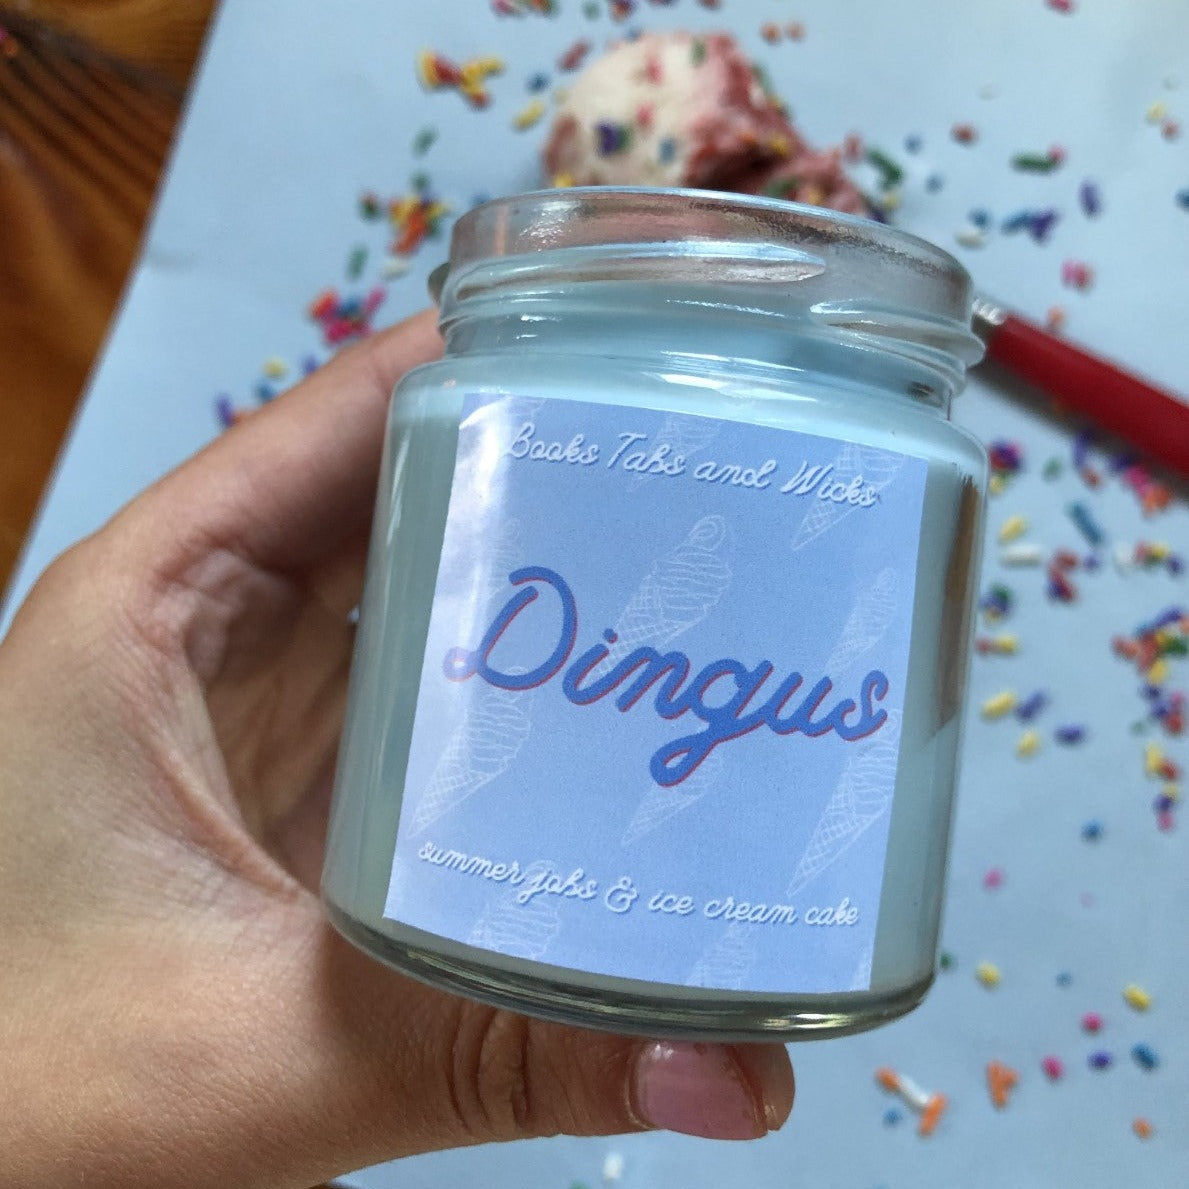 Dingus | blue sugar